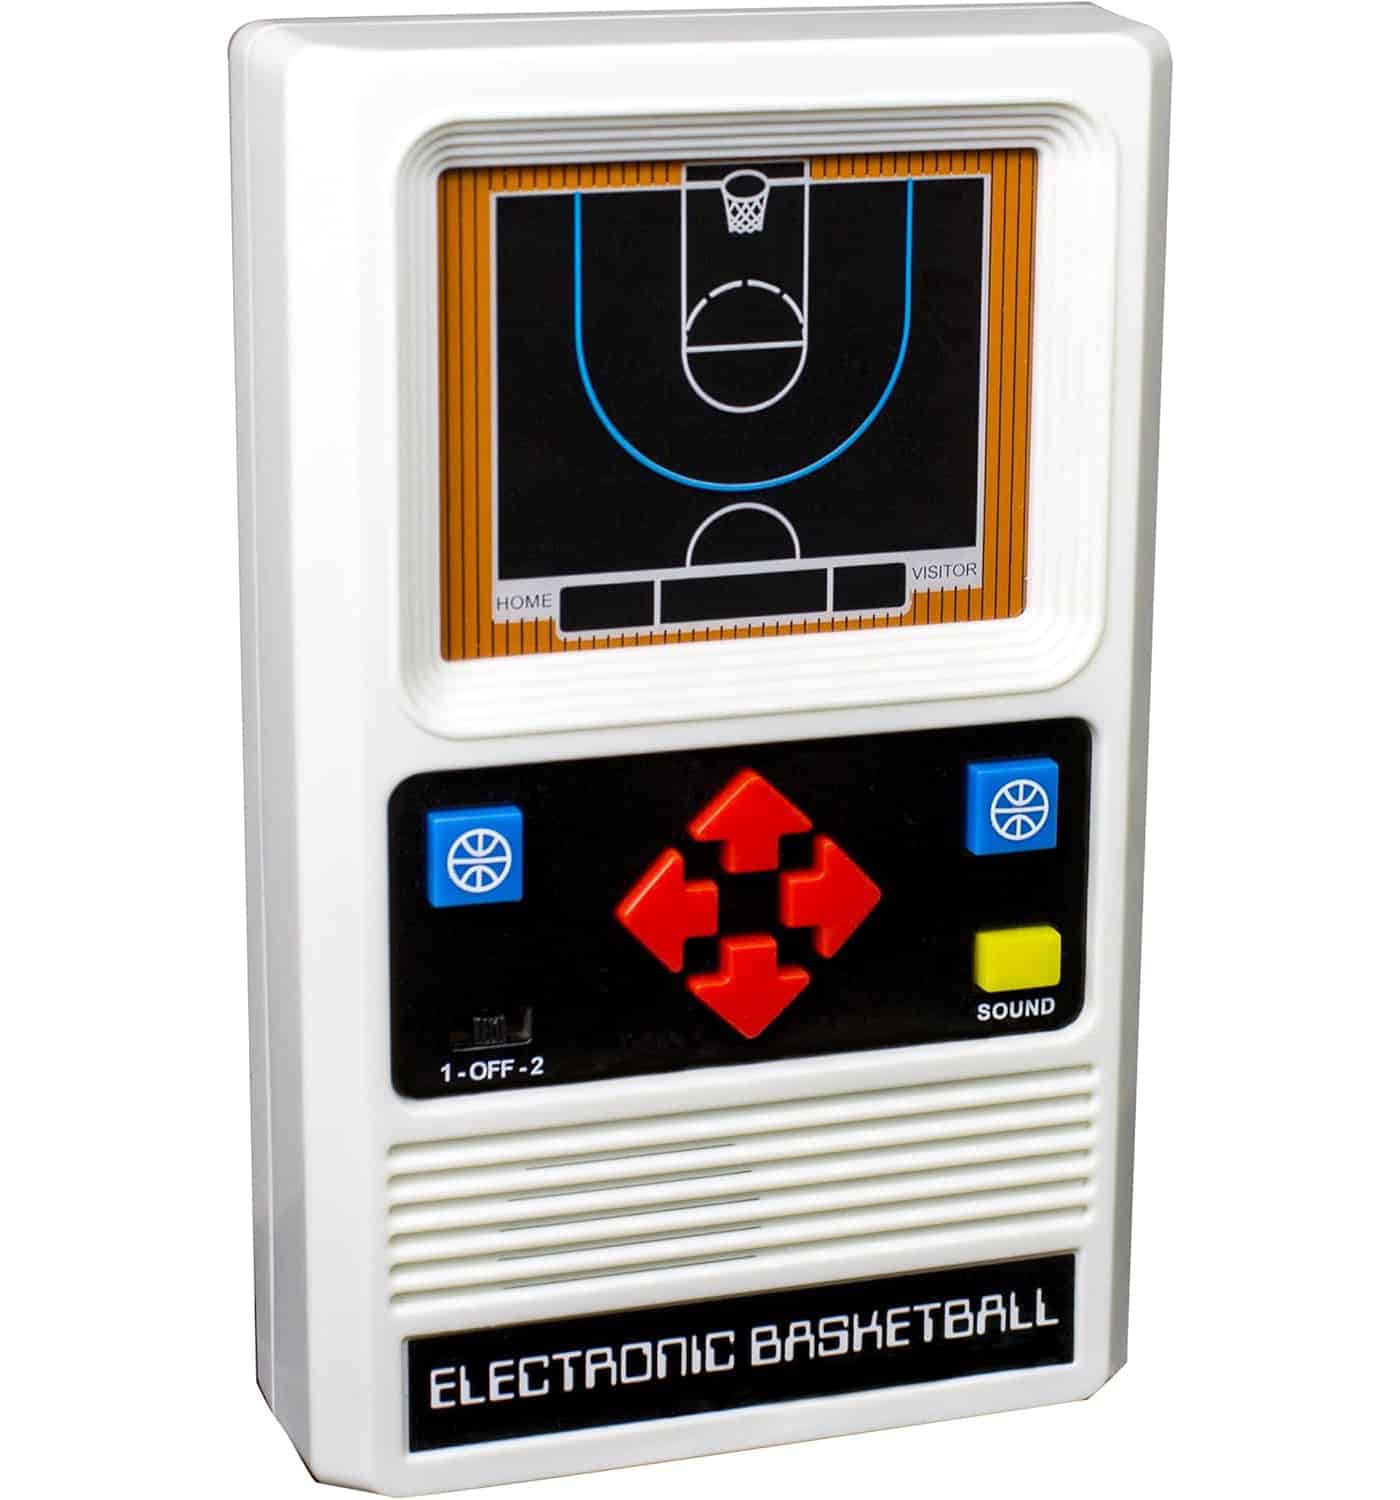 Basketball Retro Electronic Game